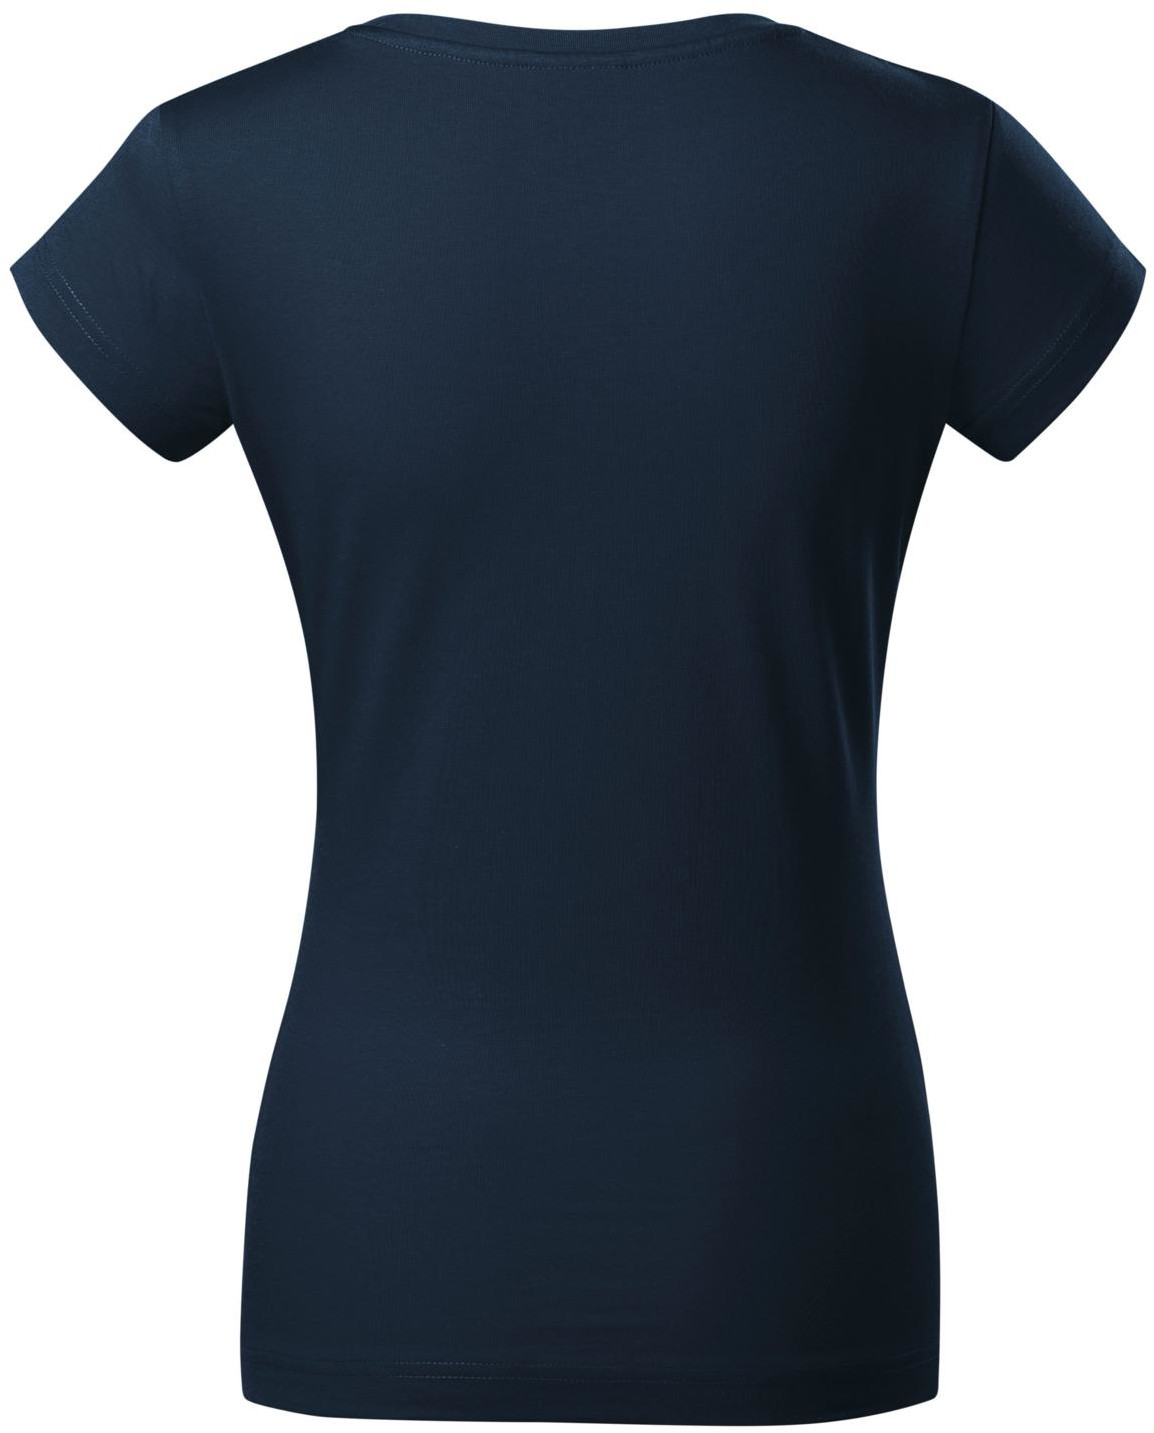 MALFINI T-Shirt Damen Viper 161